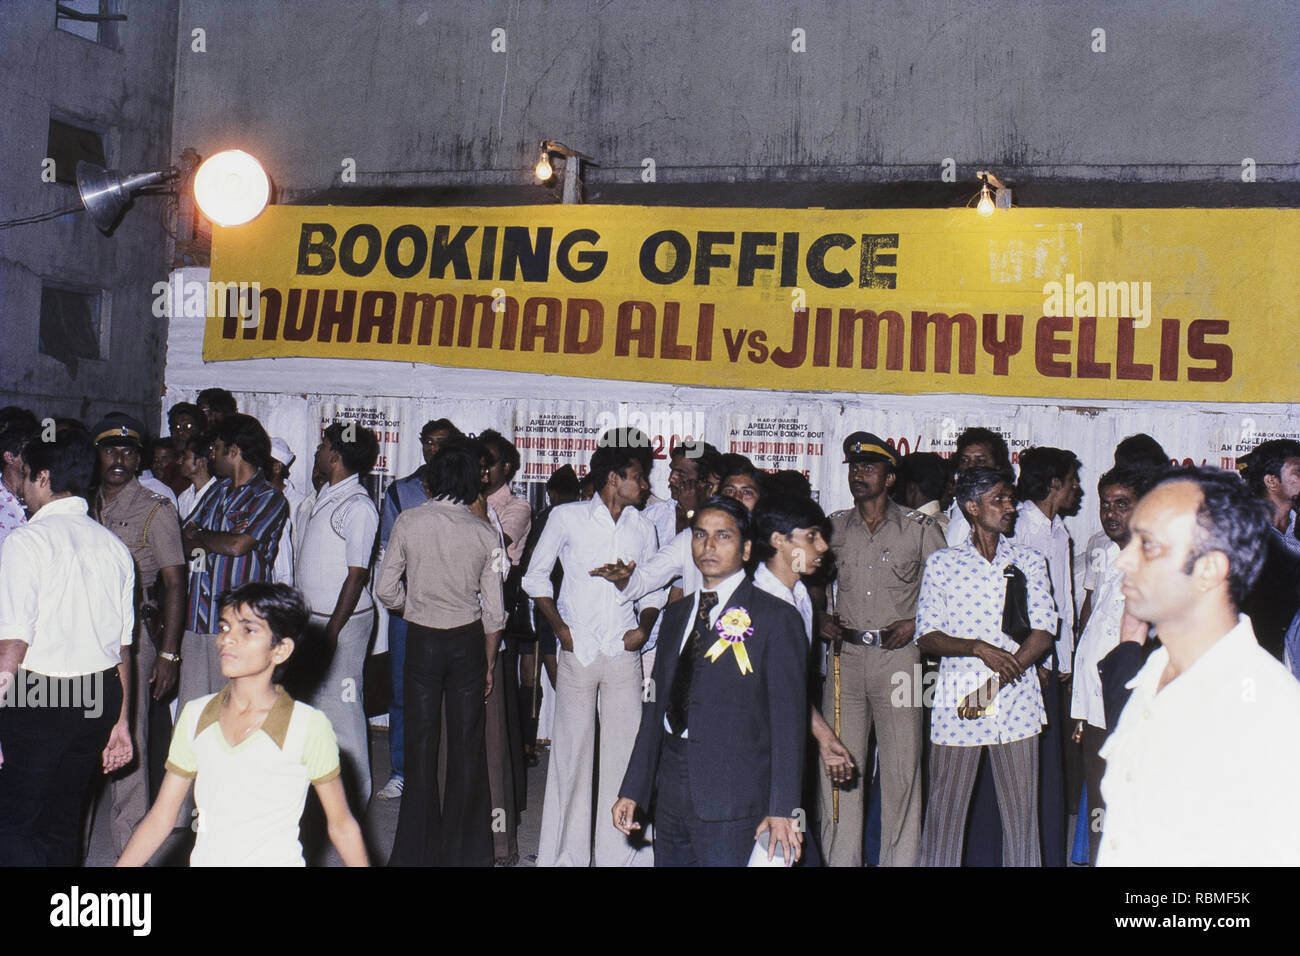 People at Booking Office Muhammad ali vs Jimmy Ellis, India, Asia Stock Photo